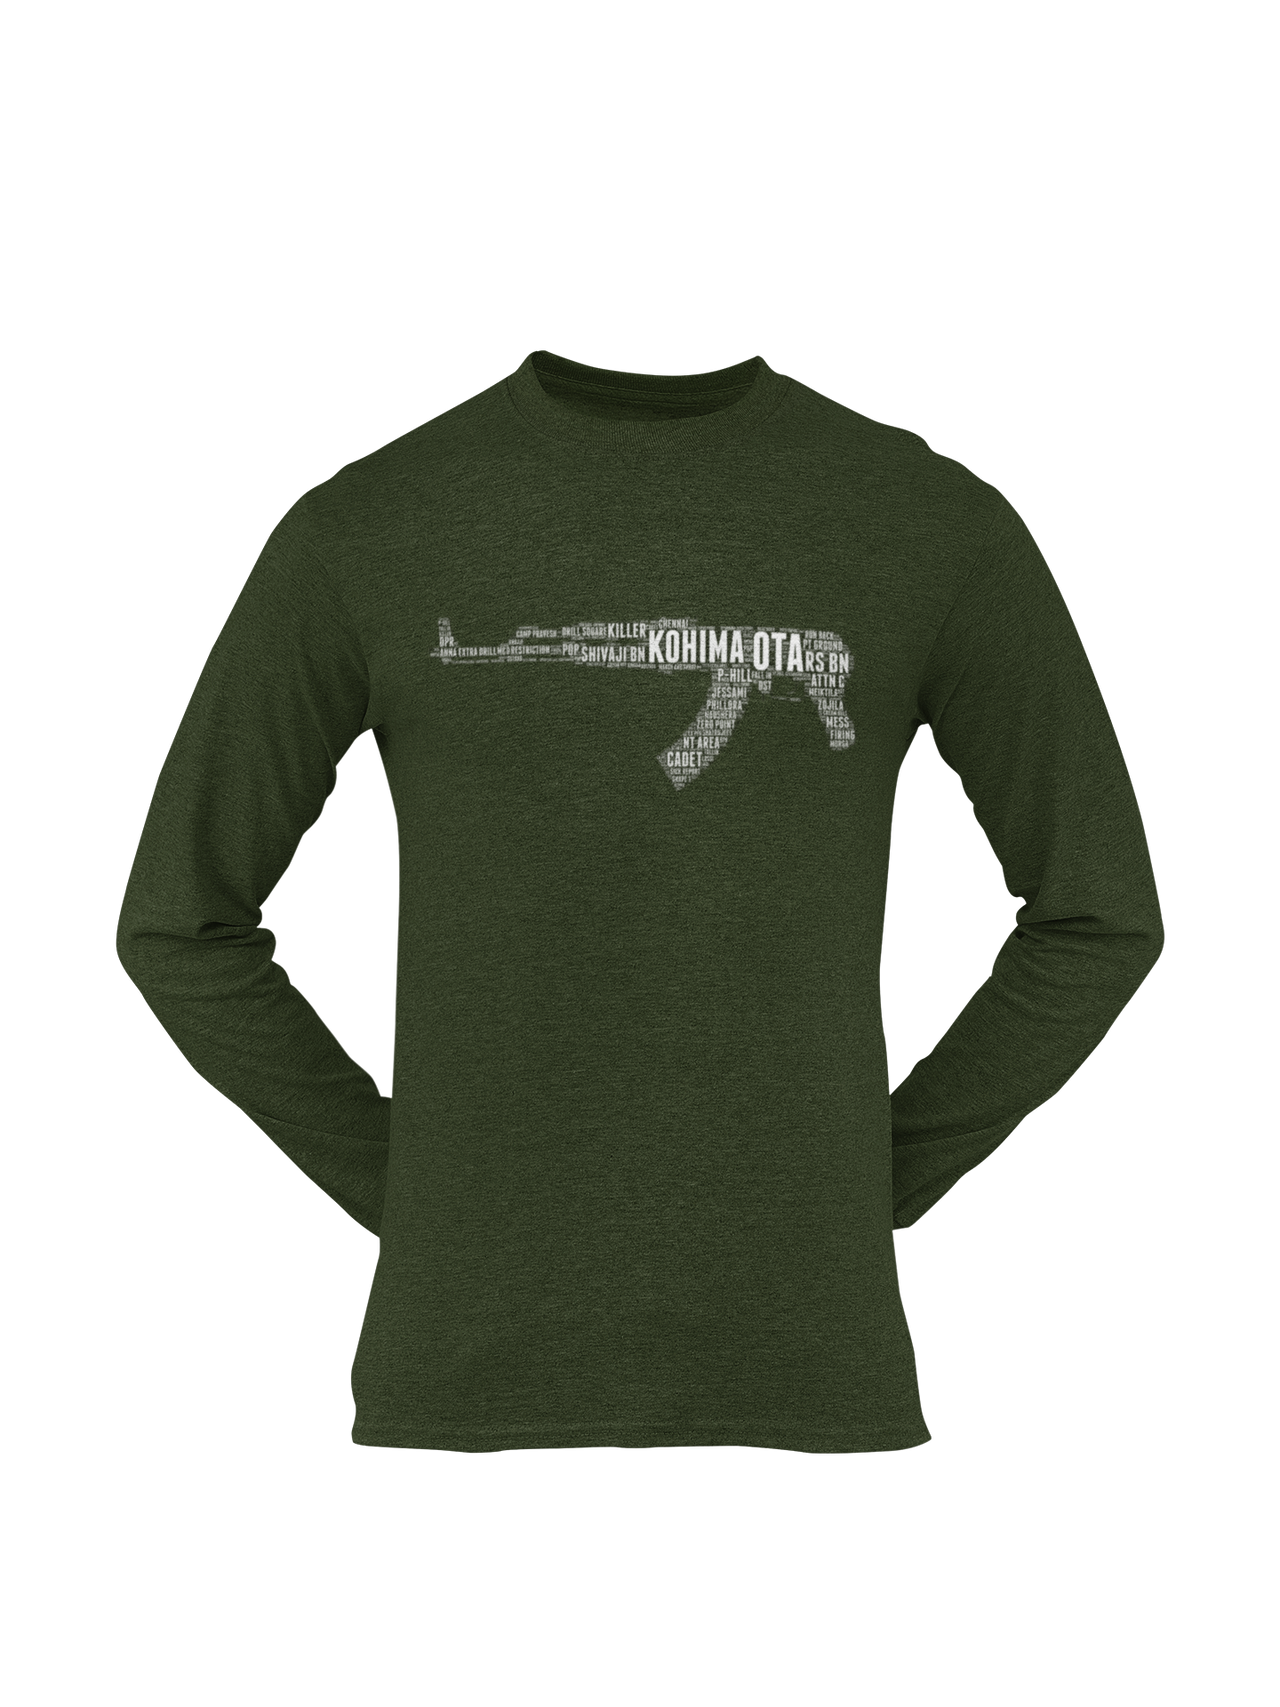 OTA T-shirt - Word Cloud Kohima - AK-47 Folding Stock (Men)